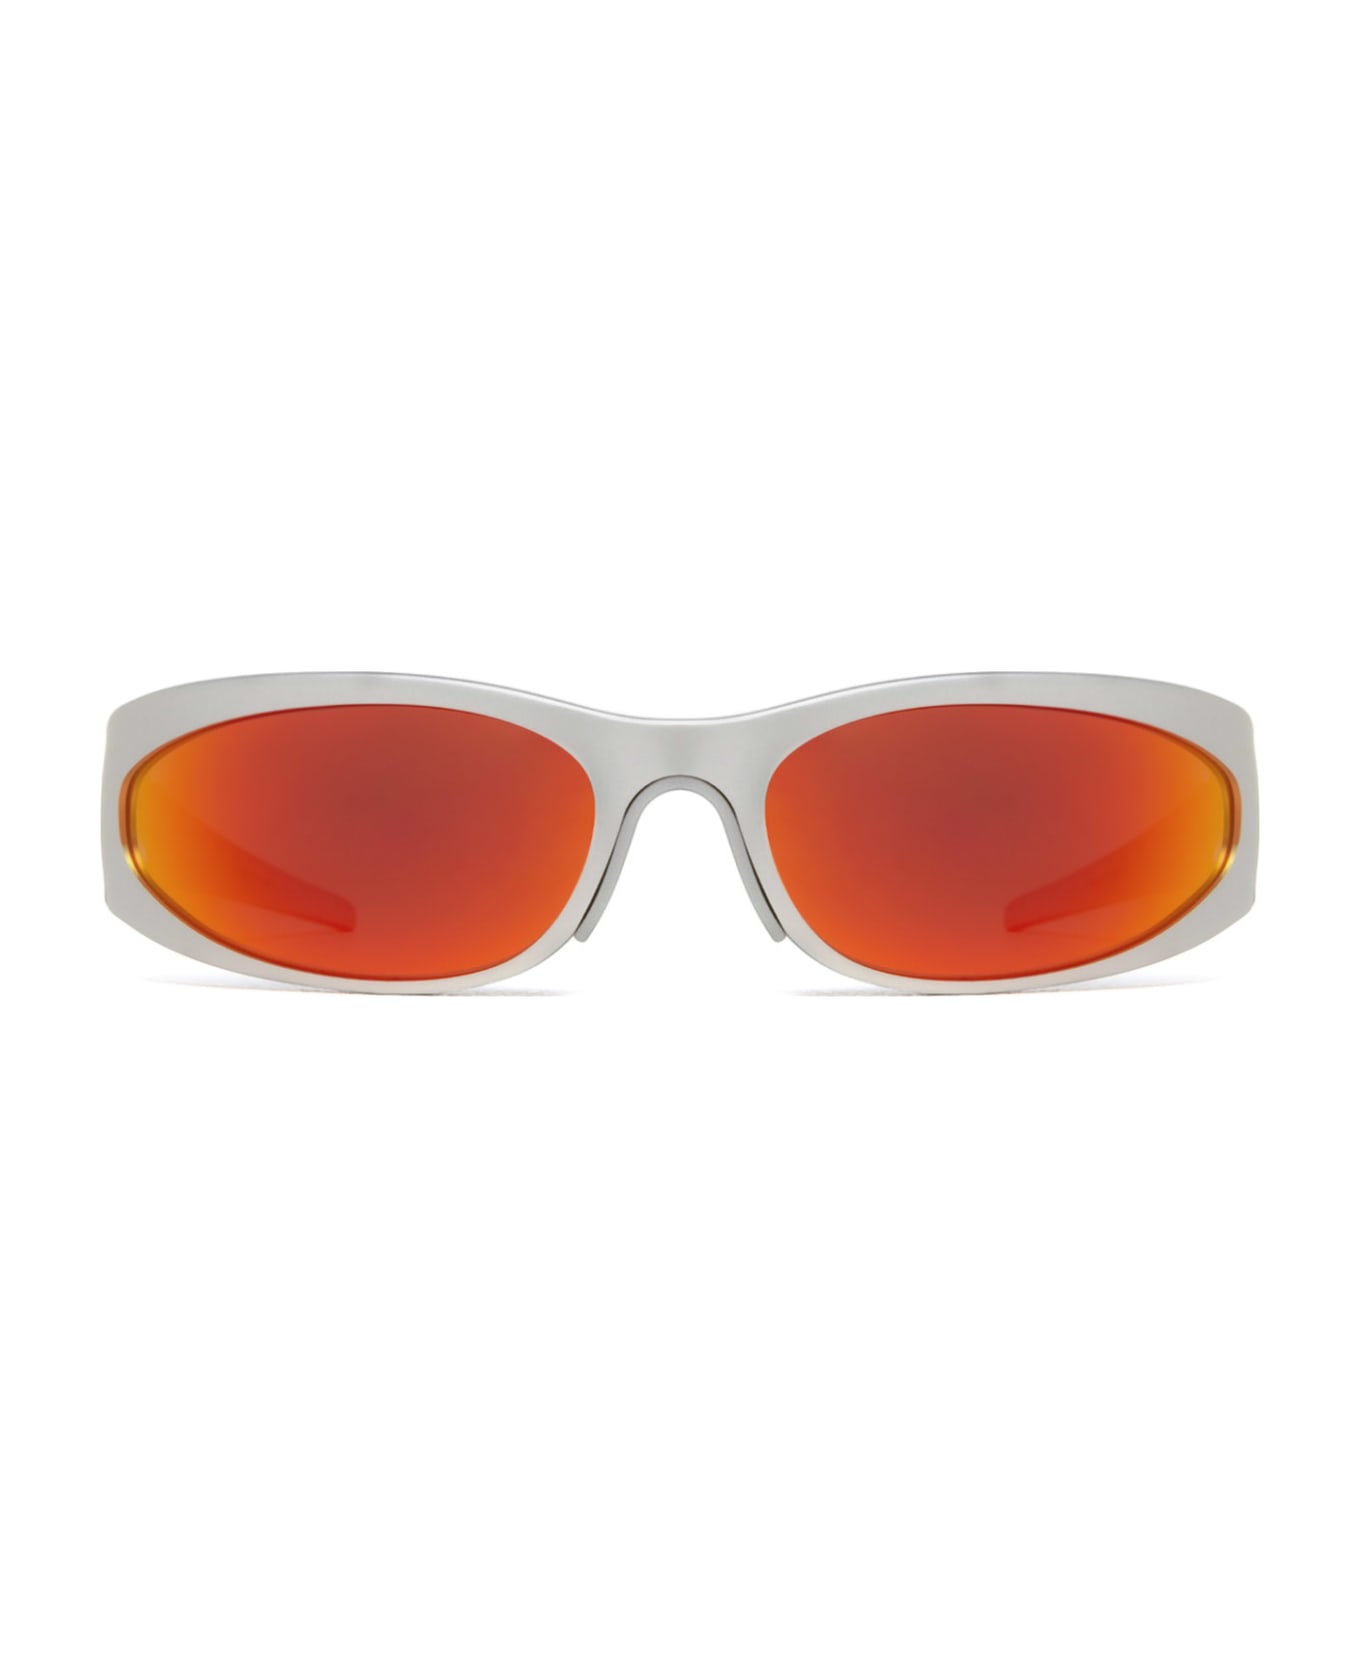 Balenciaga Eyewear Bb0290s Sunglasses - 004 SILVER SILVER RED サングラス